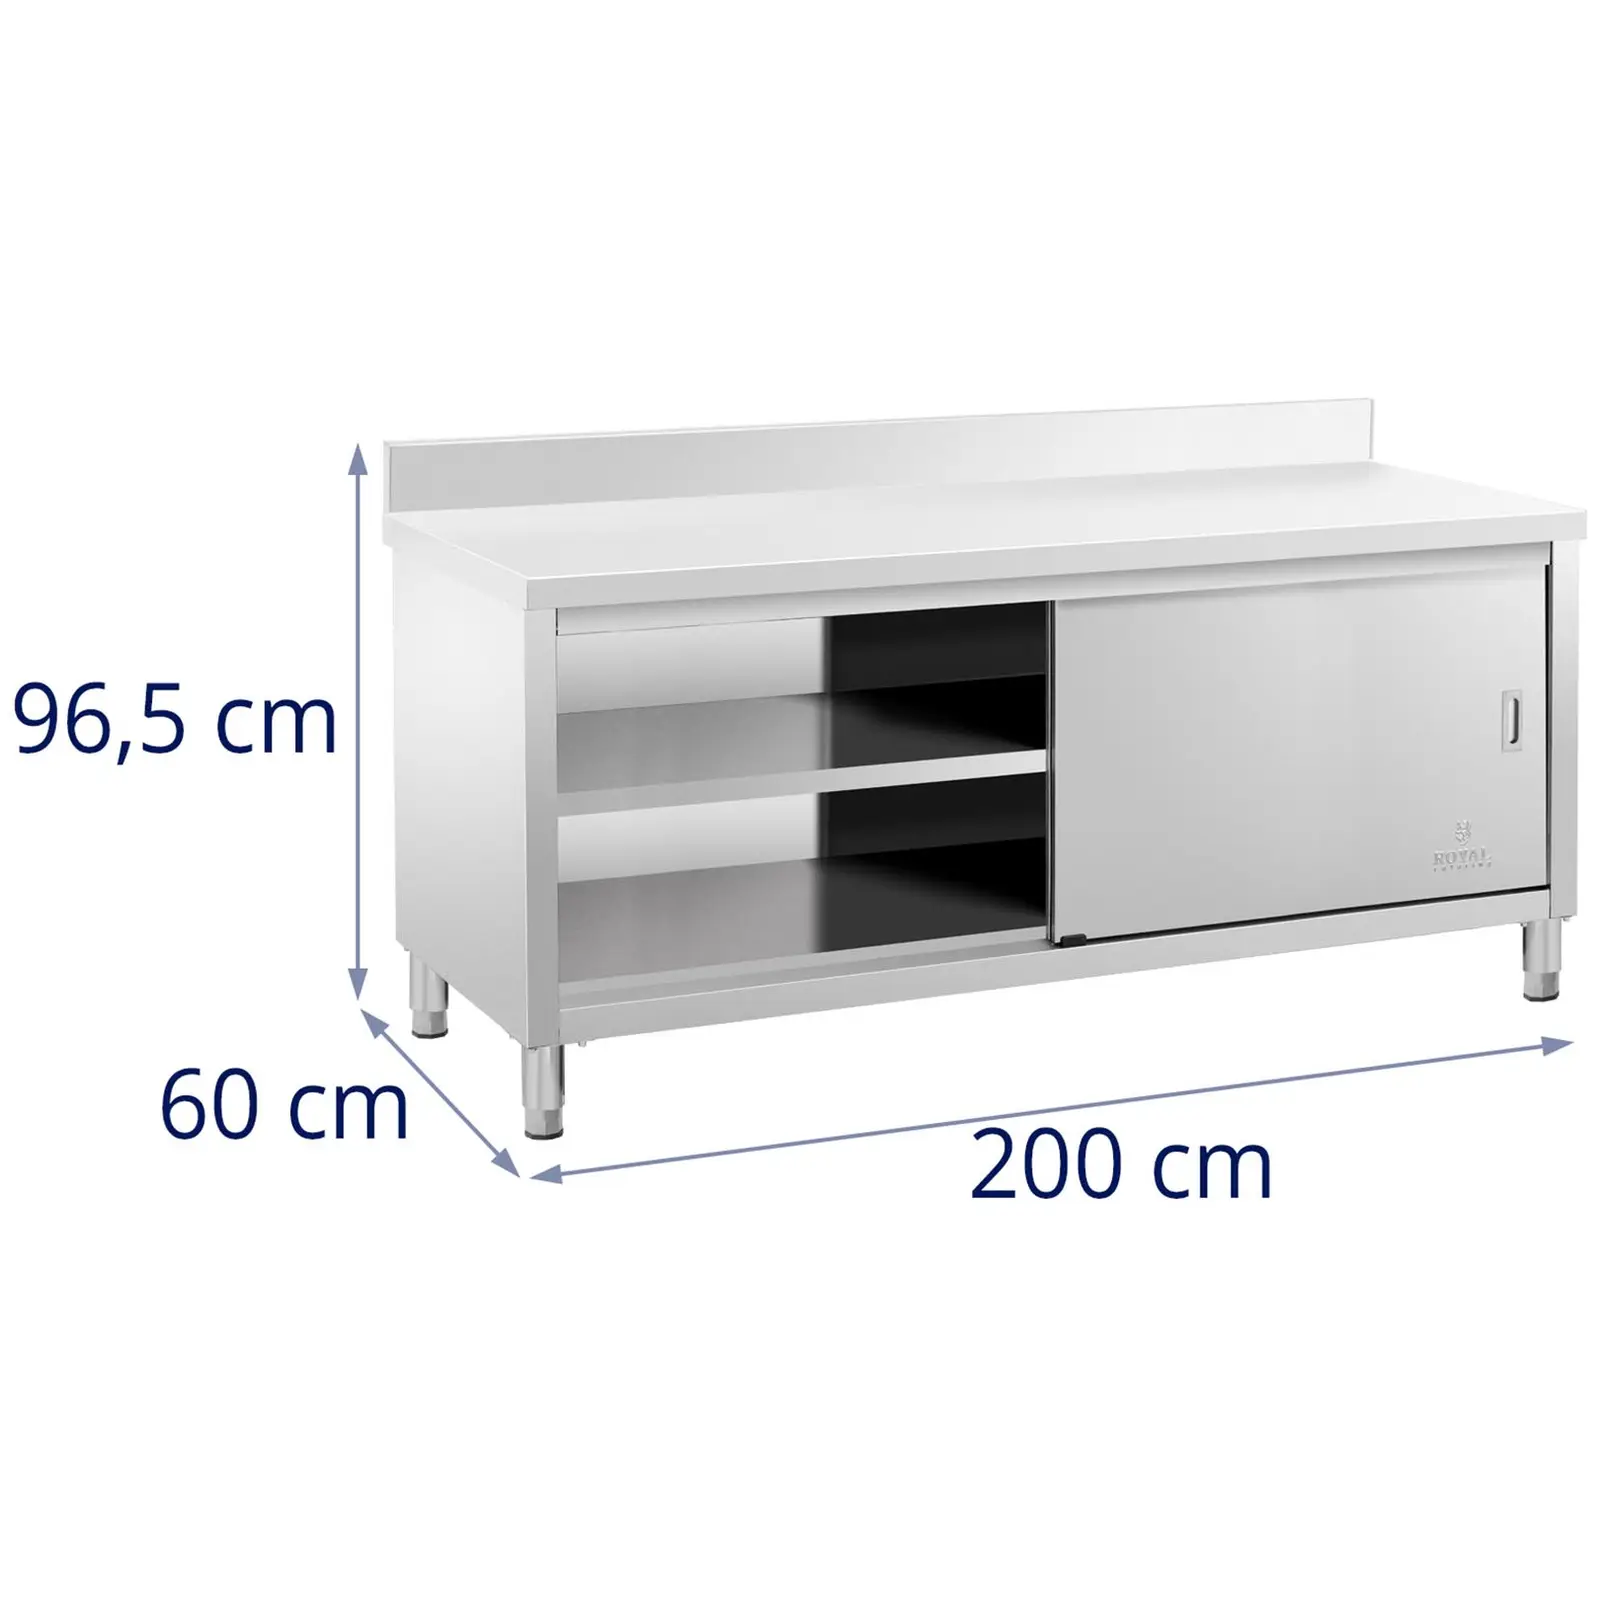 Работен шкаф - повдигнат - 200 x 60 см - товароносимост 600 кг